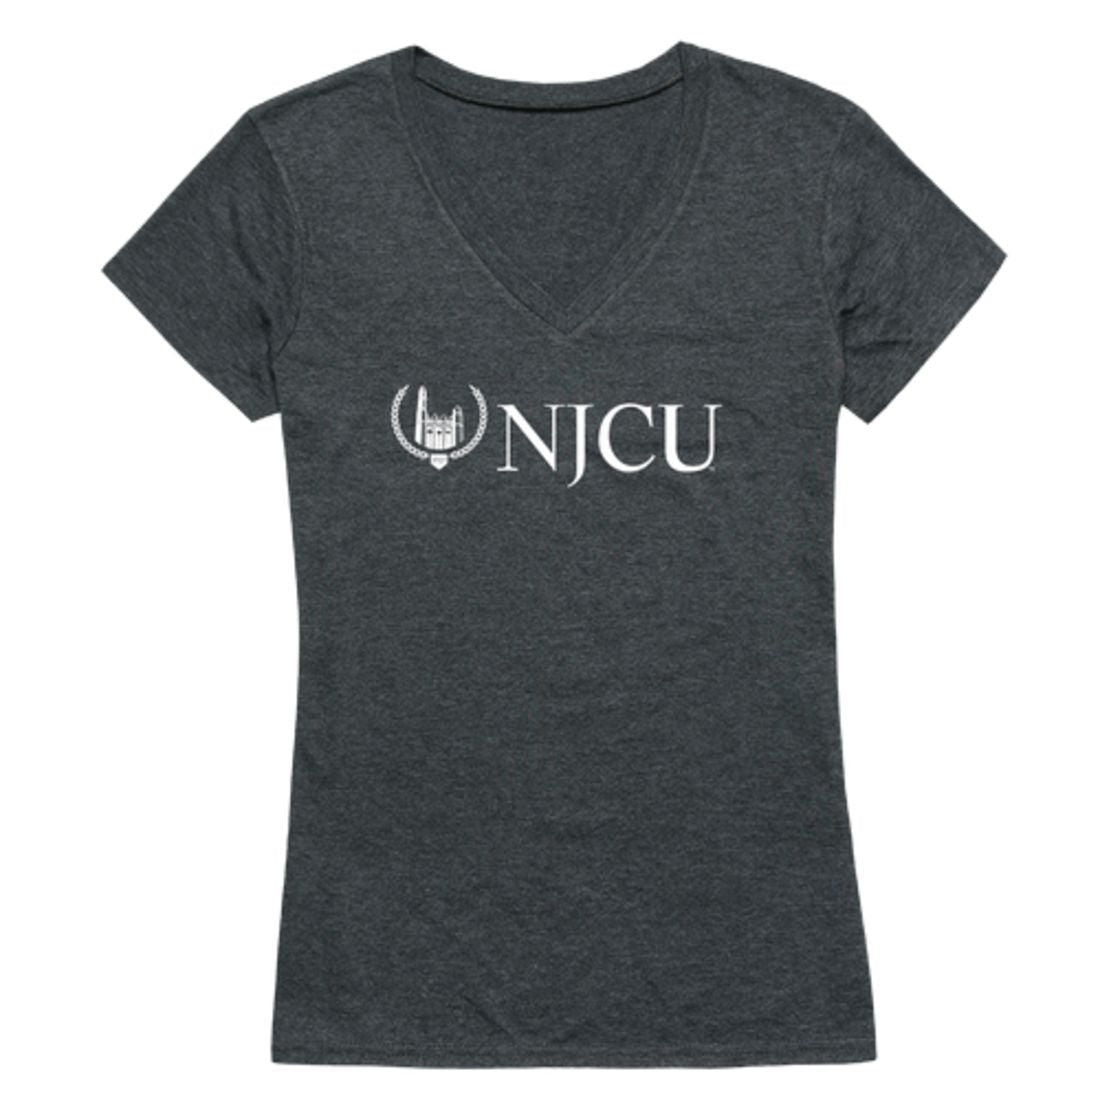 New Jersey City University Knights Womens Institutional T-Shirt Tee